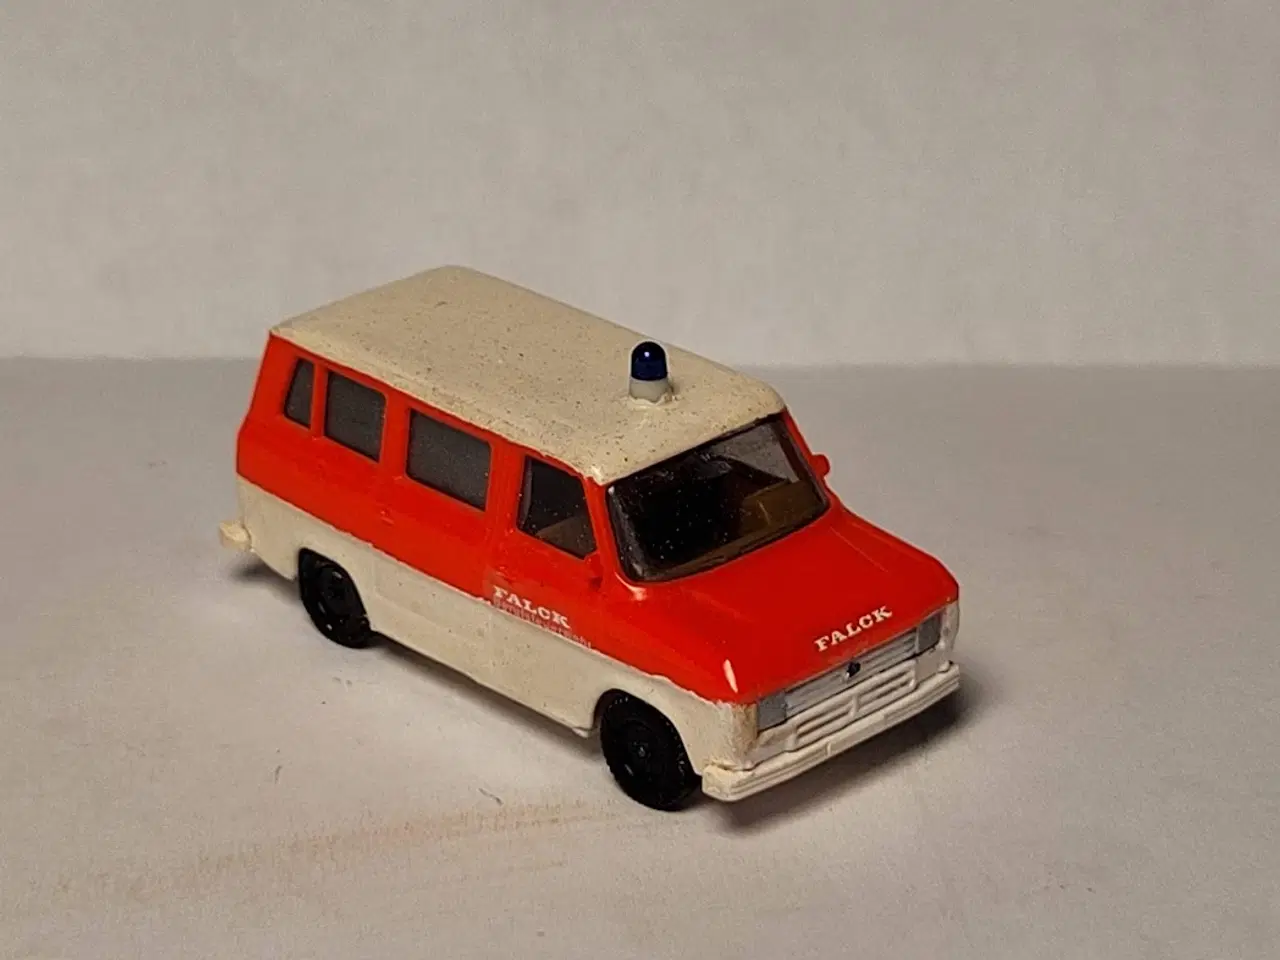 Billede 1 - Modelbil Falck ambulance